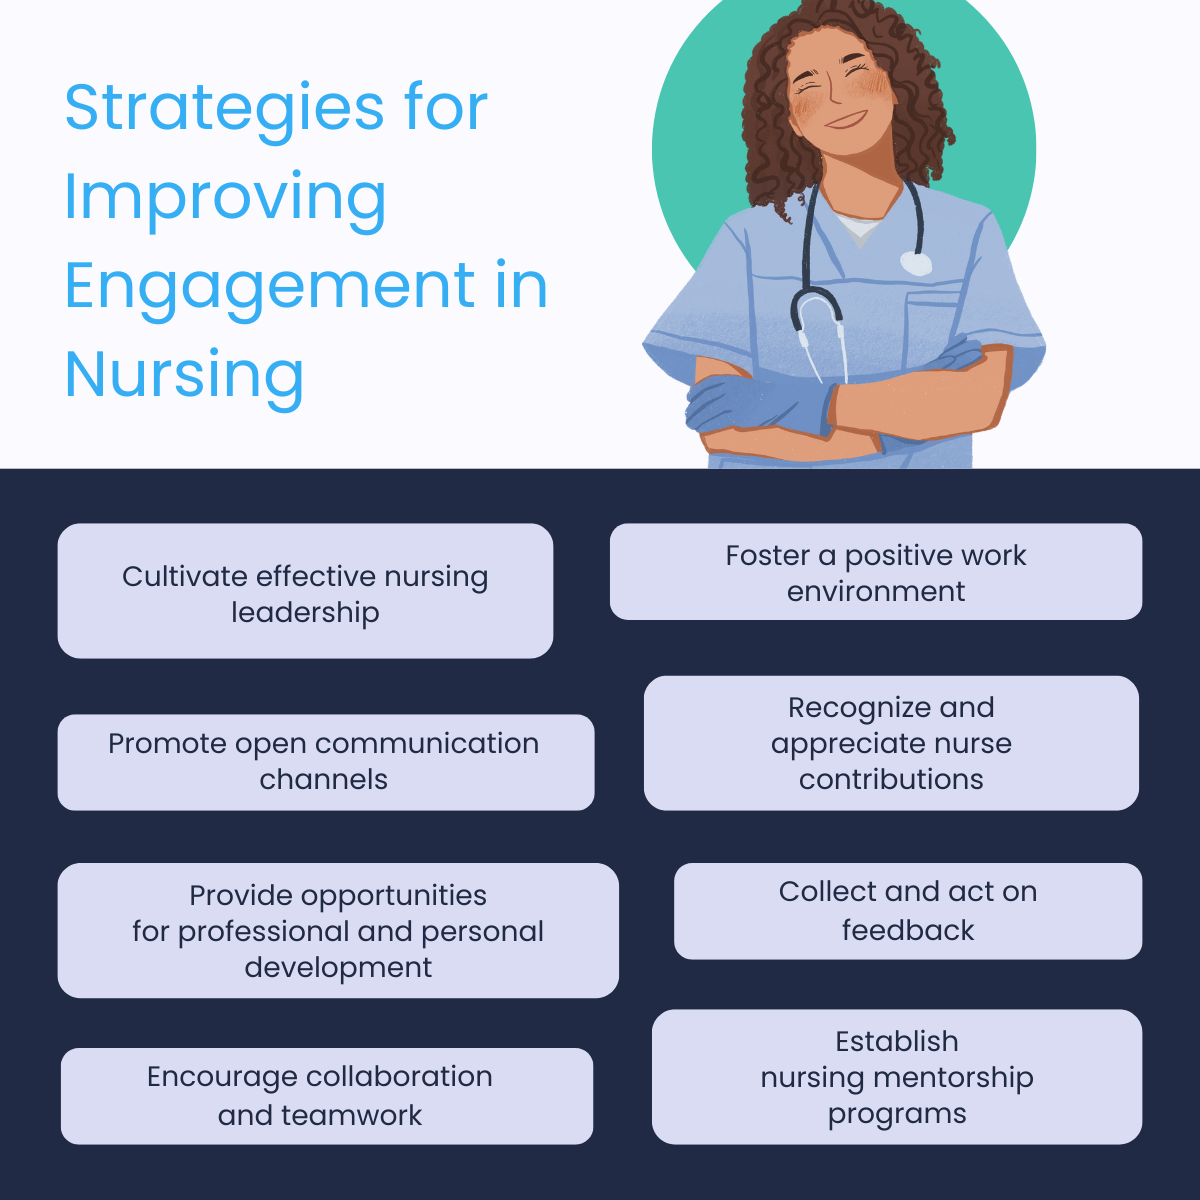 Strategies for Improving Engagement in Nursing